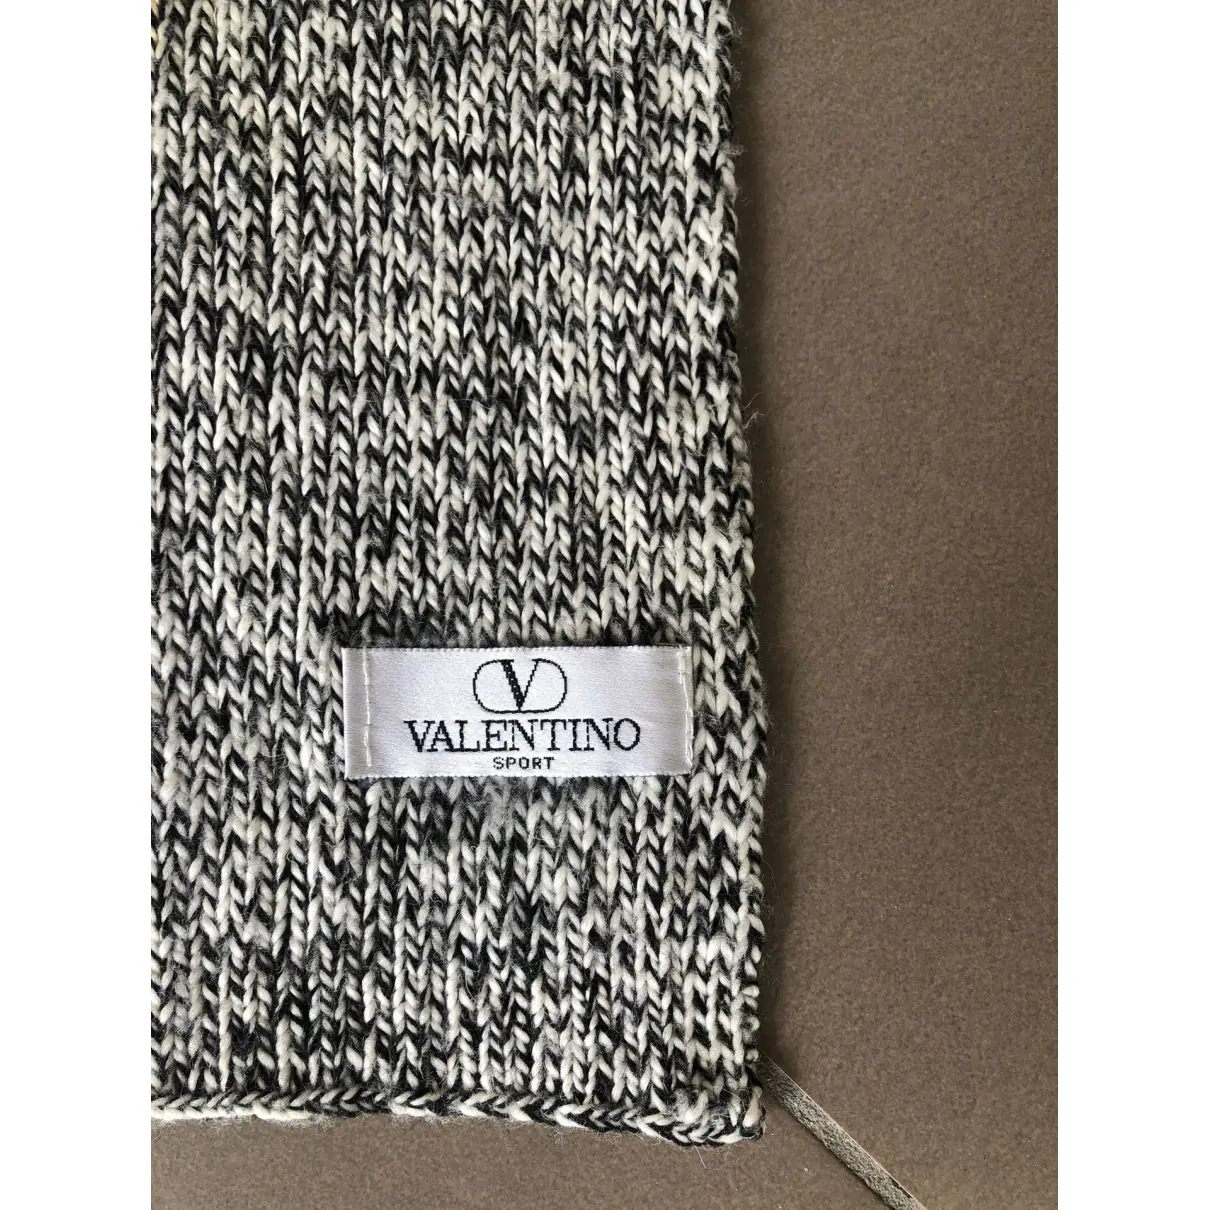 Buy Valentino Garavani Wool scarf & pocket square online